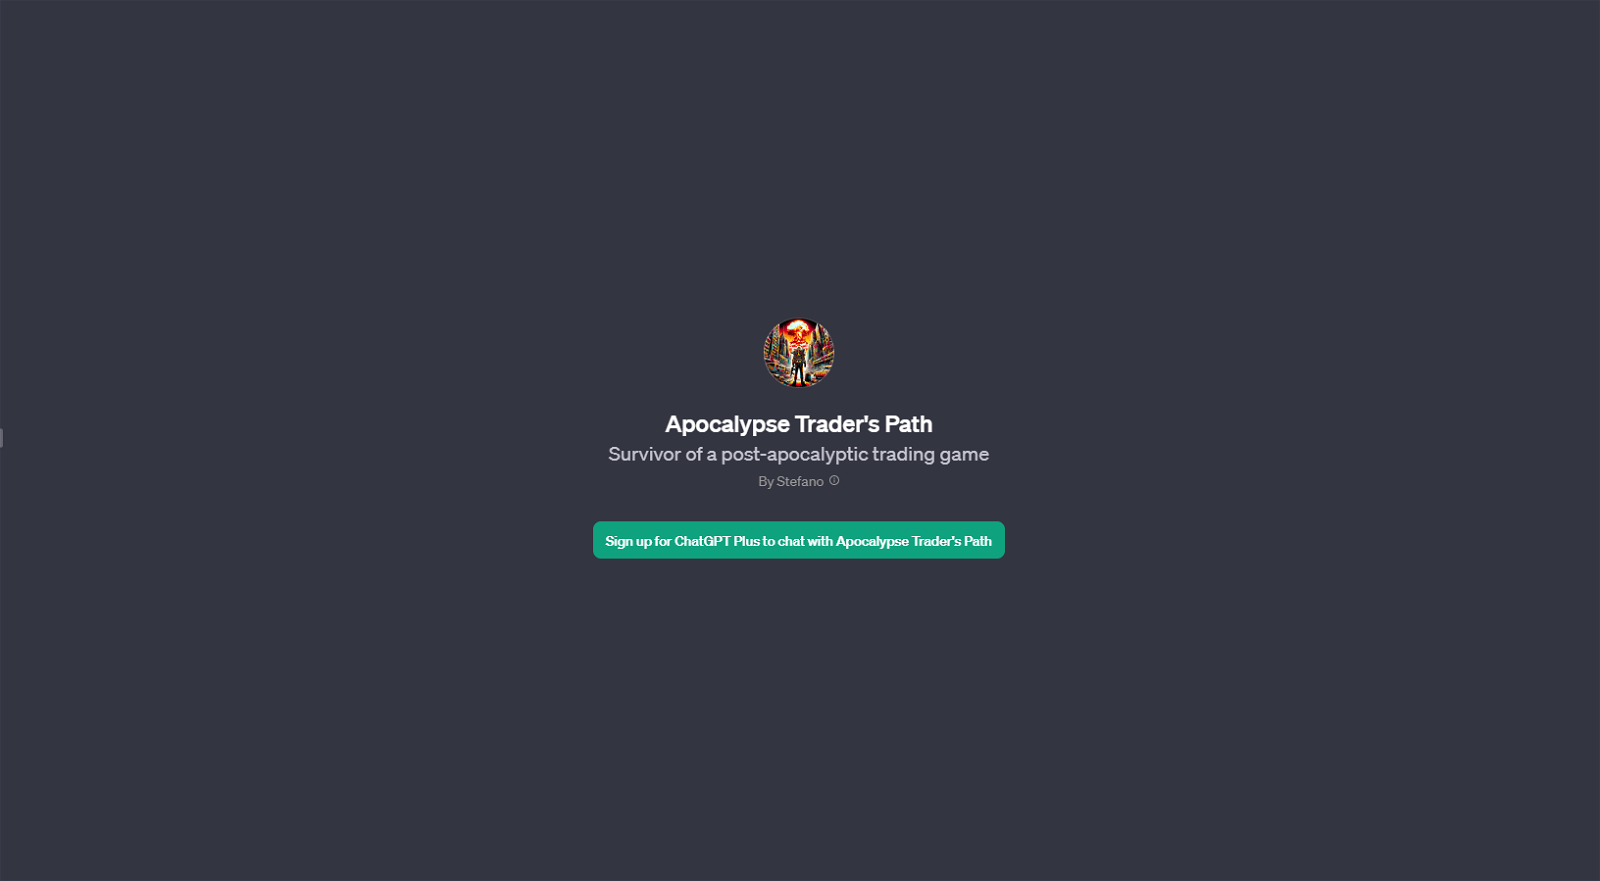 Apocalypse Trader's Path website